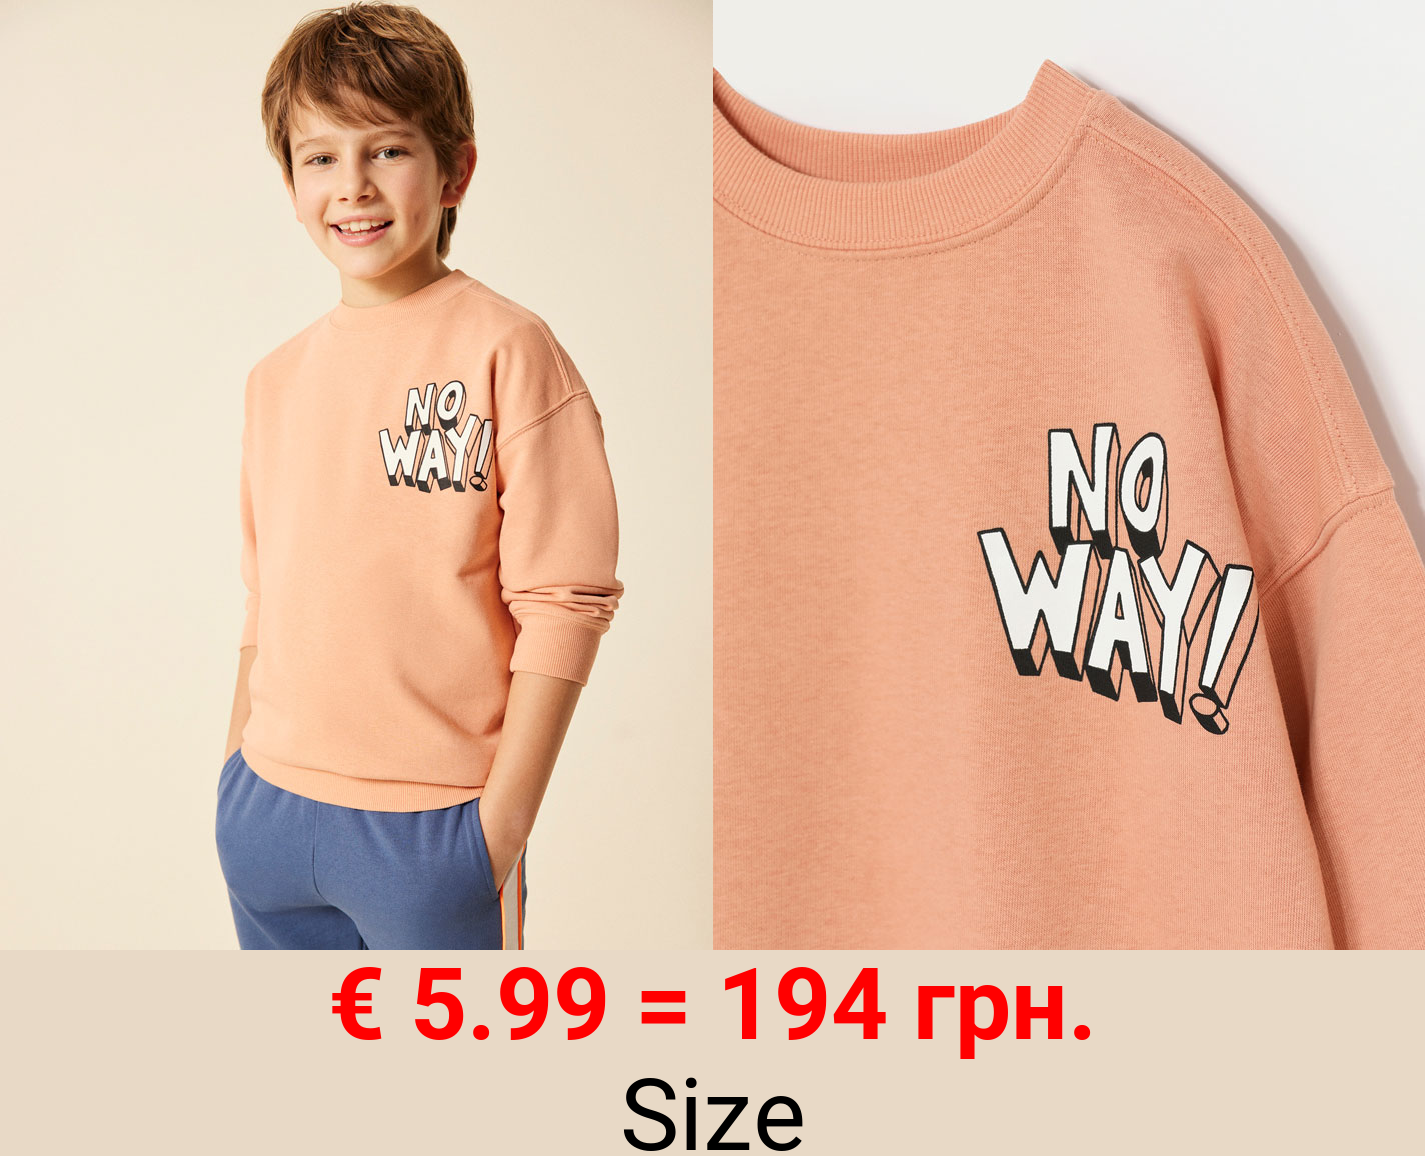 2-pack of plain and printed sweatshirts